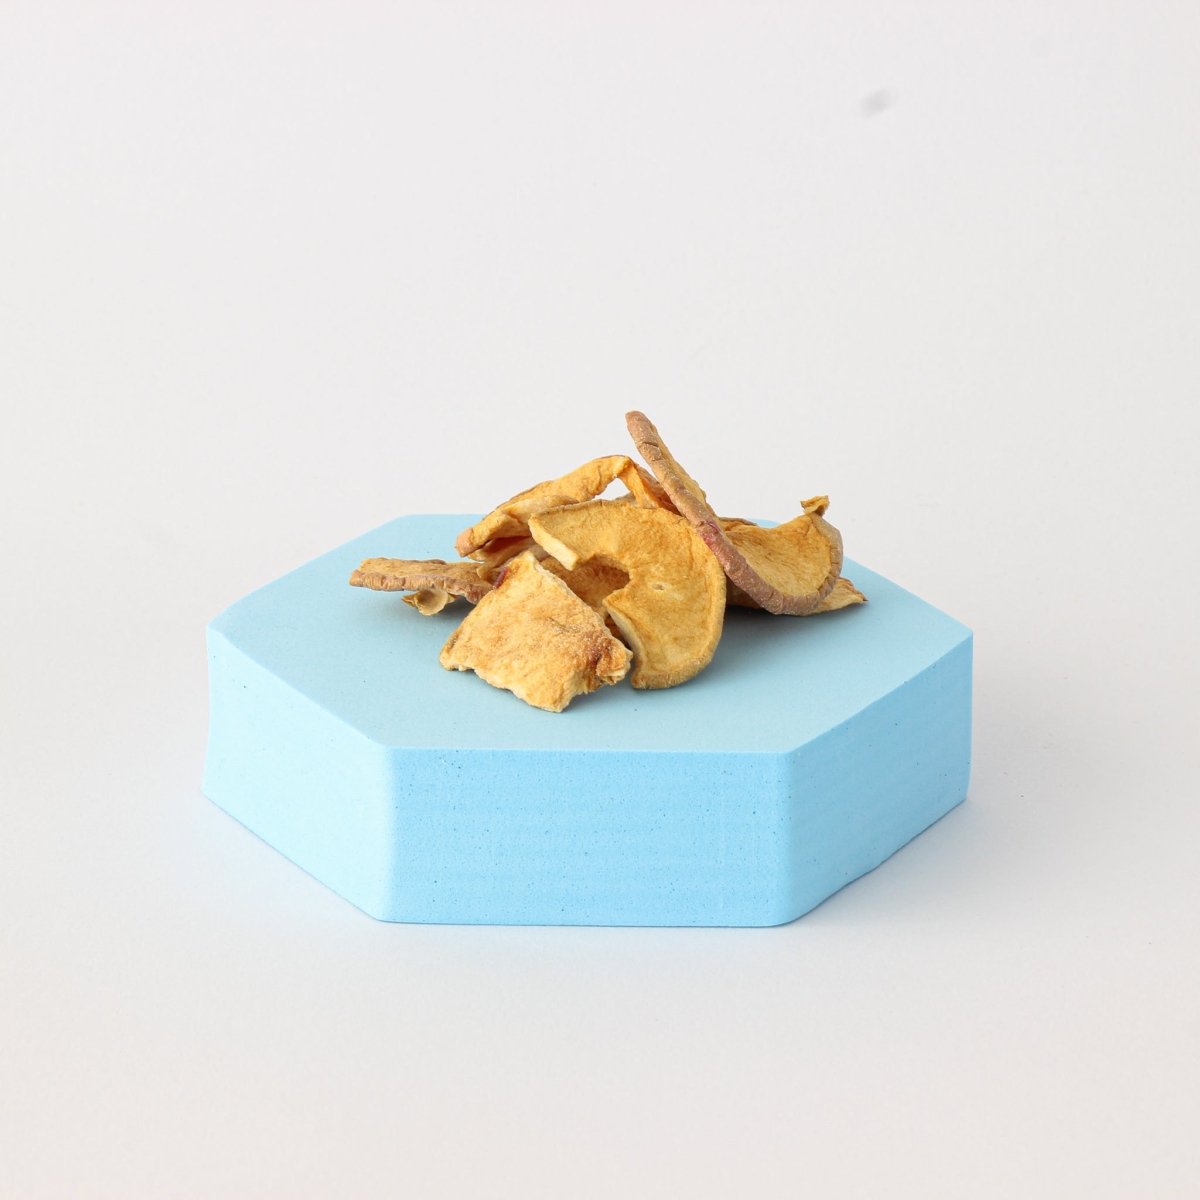 Spare Apple Crisps - The Little Lunchbox